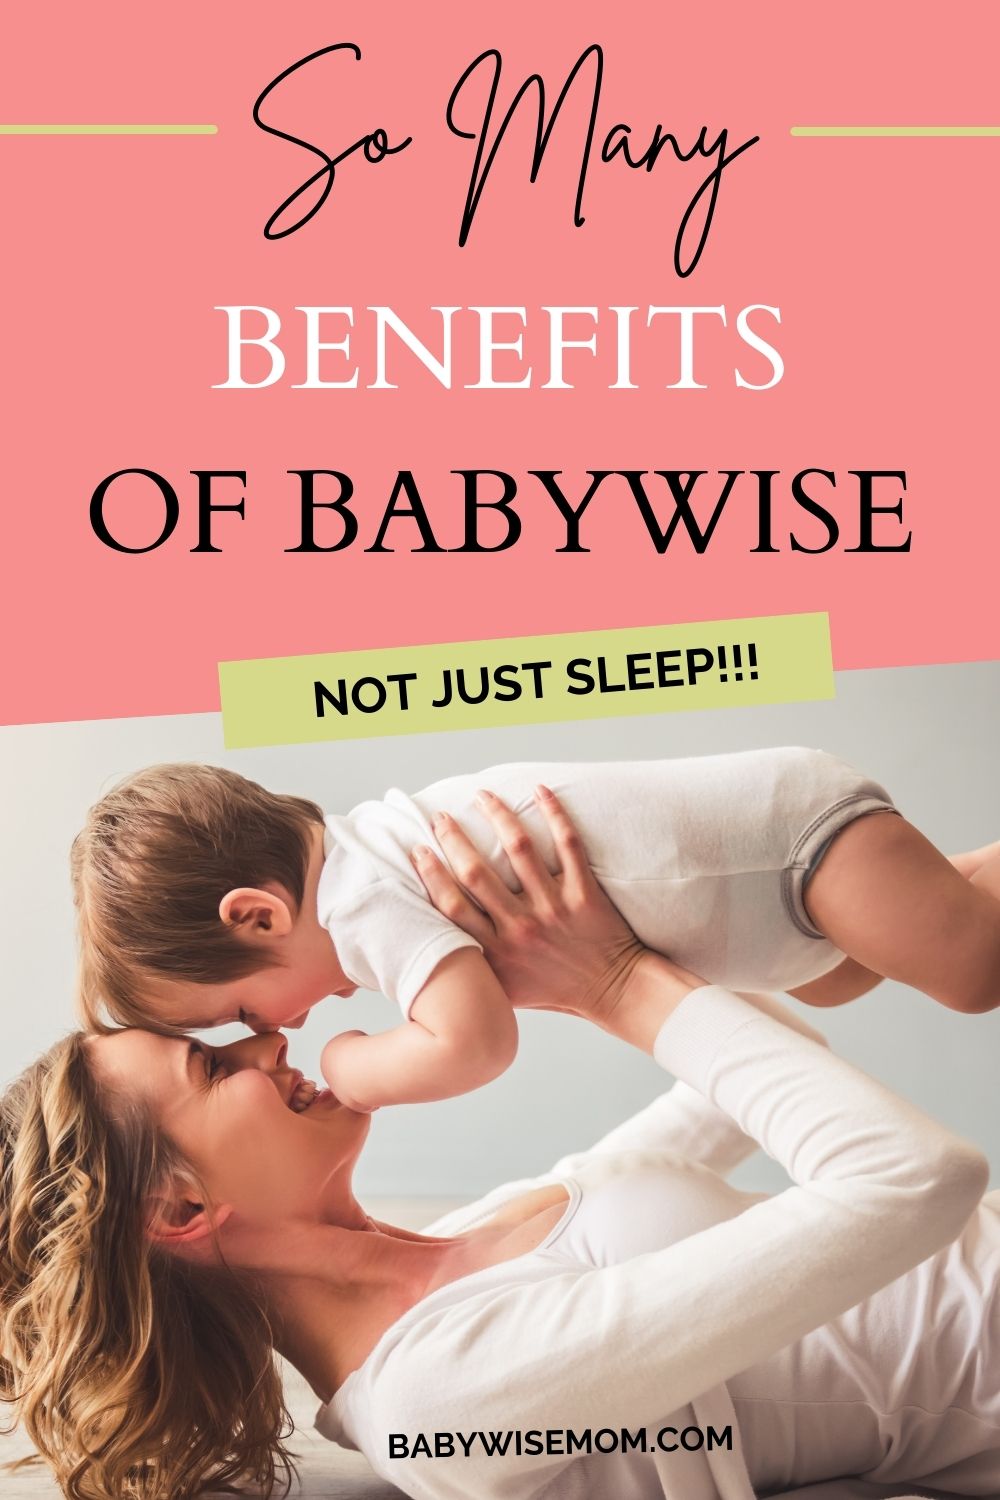 Benefits of Babywise